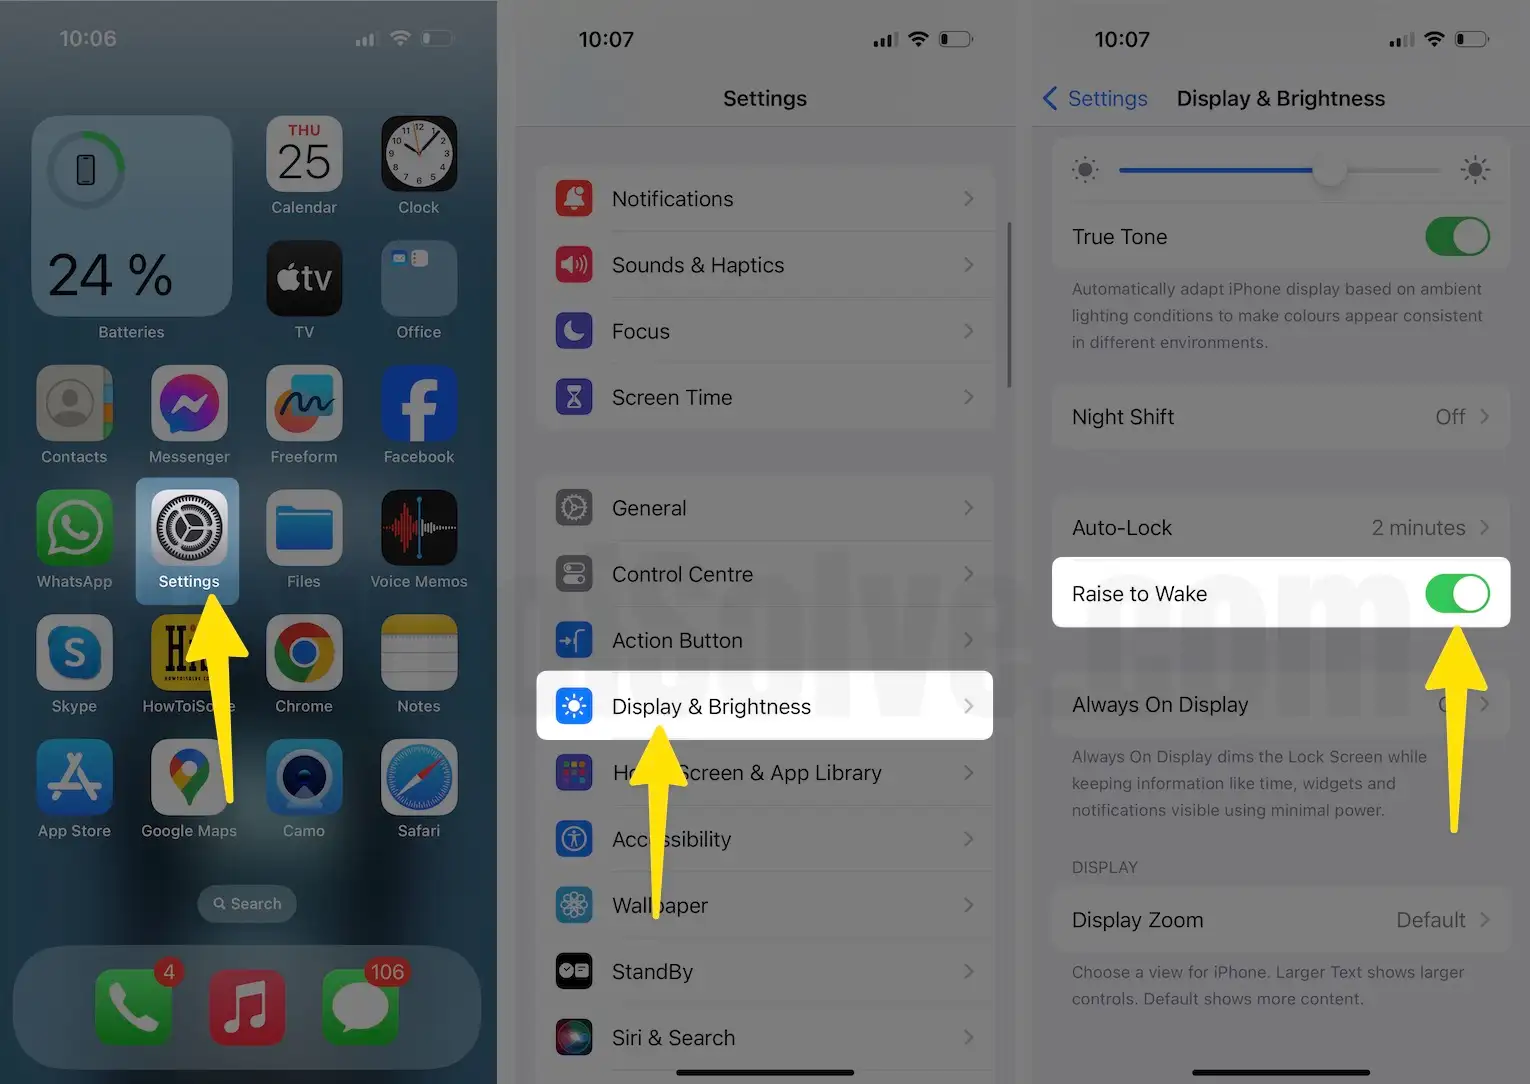 Open setting app tap display & brightness turn on raise to wake on iPhone